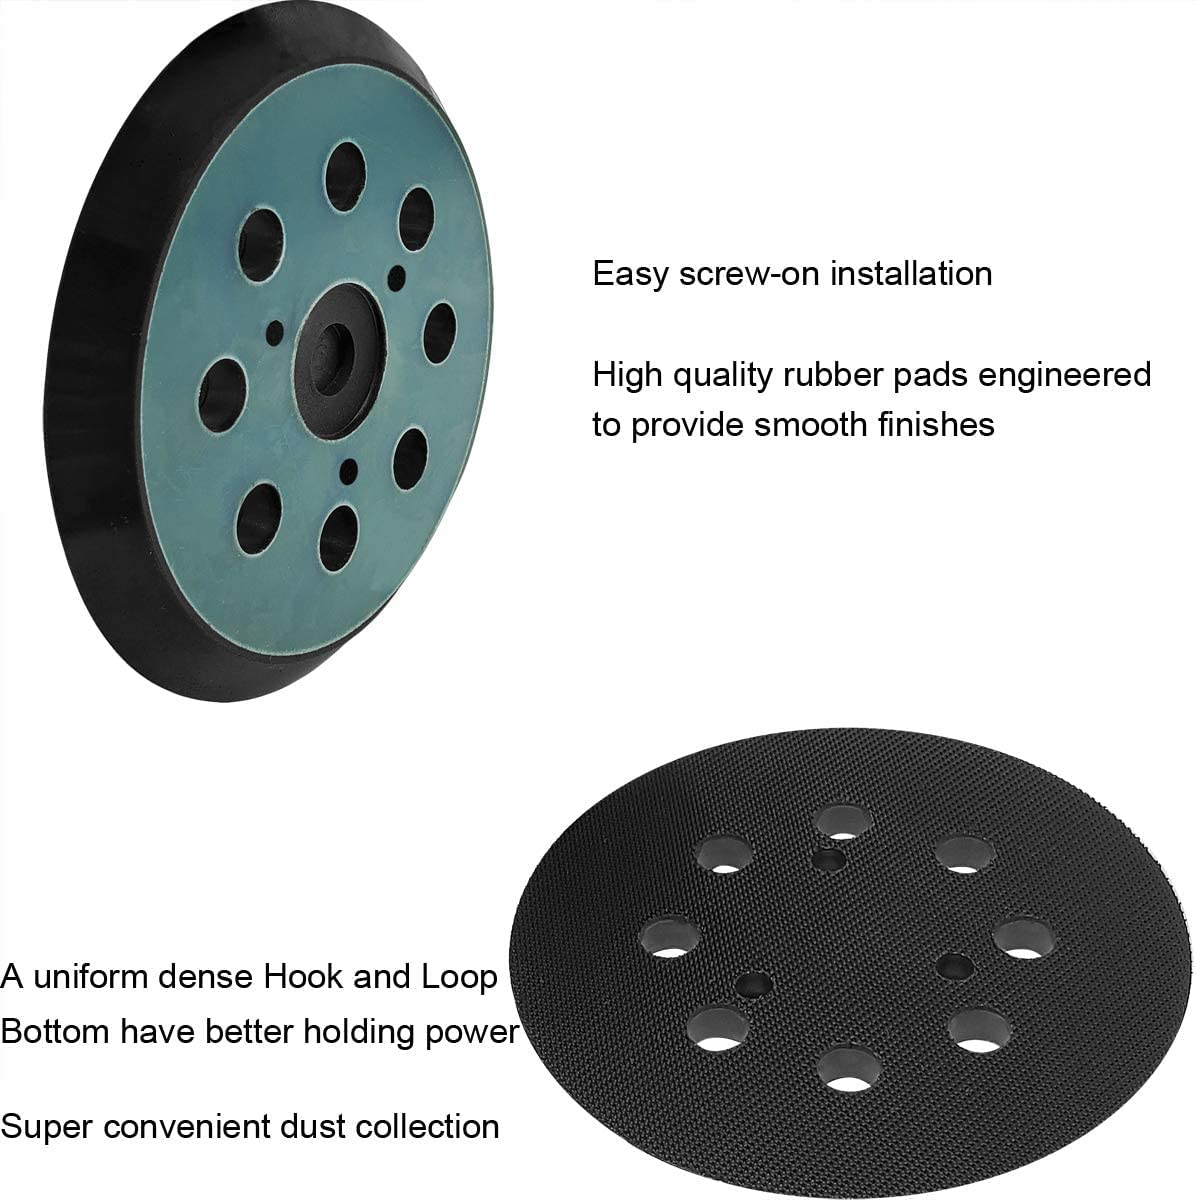 5 Inch 8-Hole Hook and Loop Sander Pads Replacement Sanding Pads for DeWalt DW420, DW421, Dw423, DW426, D26451, D26453 Orbital Sander…